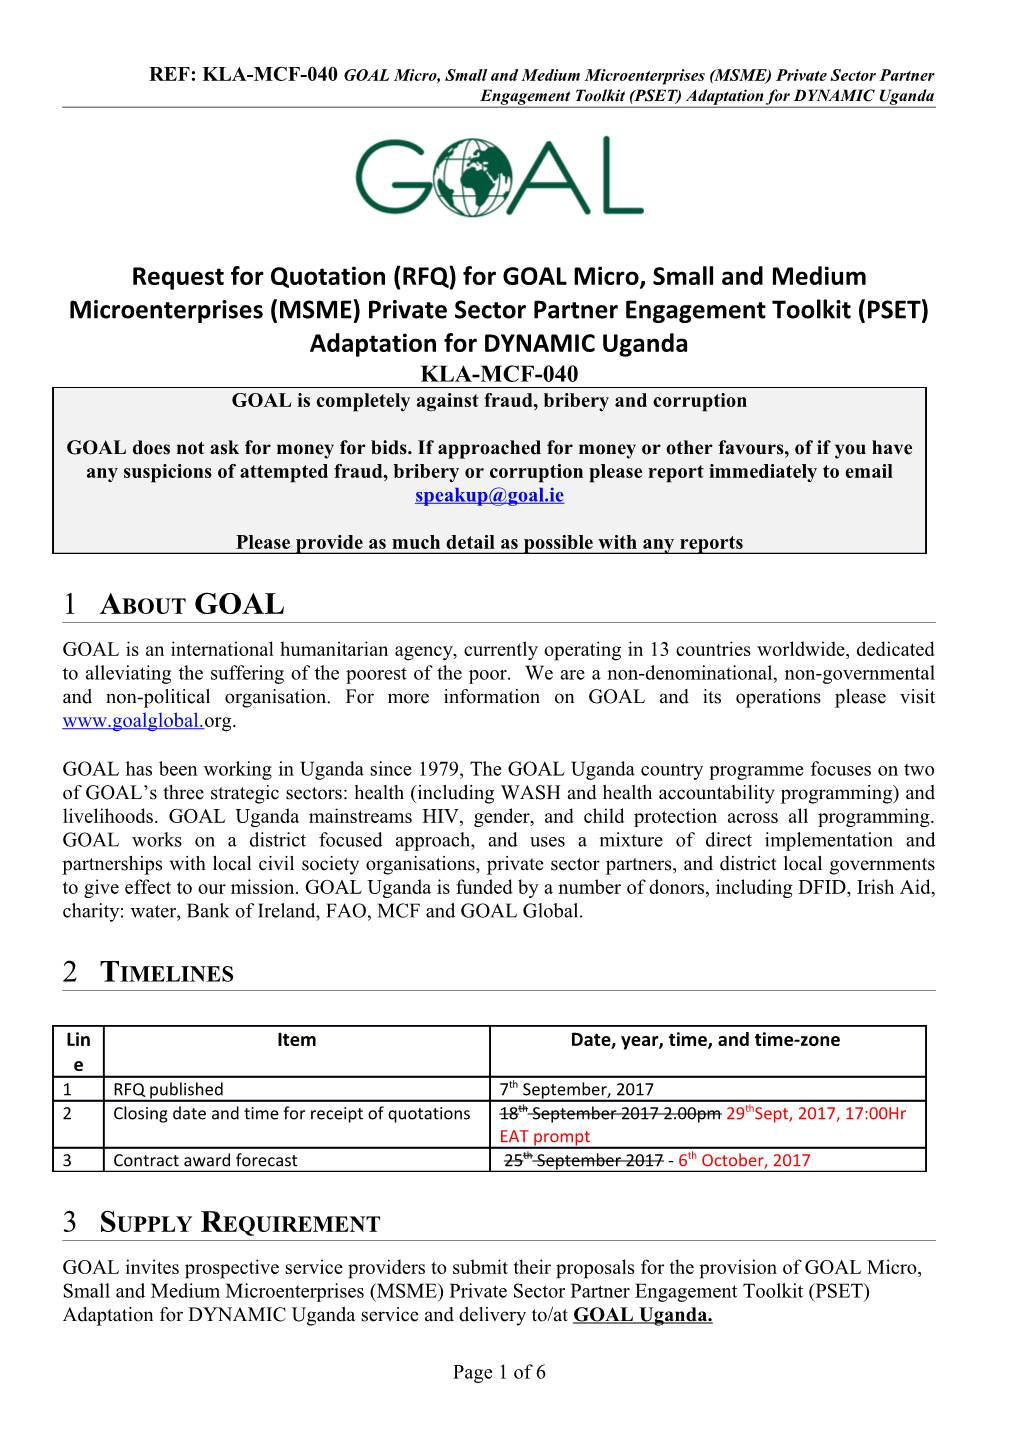 REF: KLA-MCF-040 GOAL Micro, Small and Medium Microenterprises (MSME) Private Sector Partner